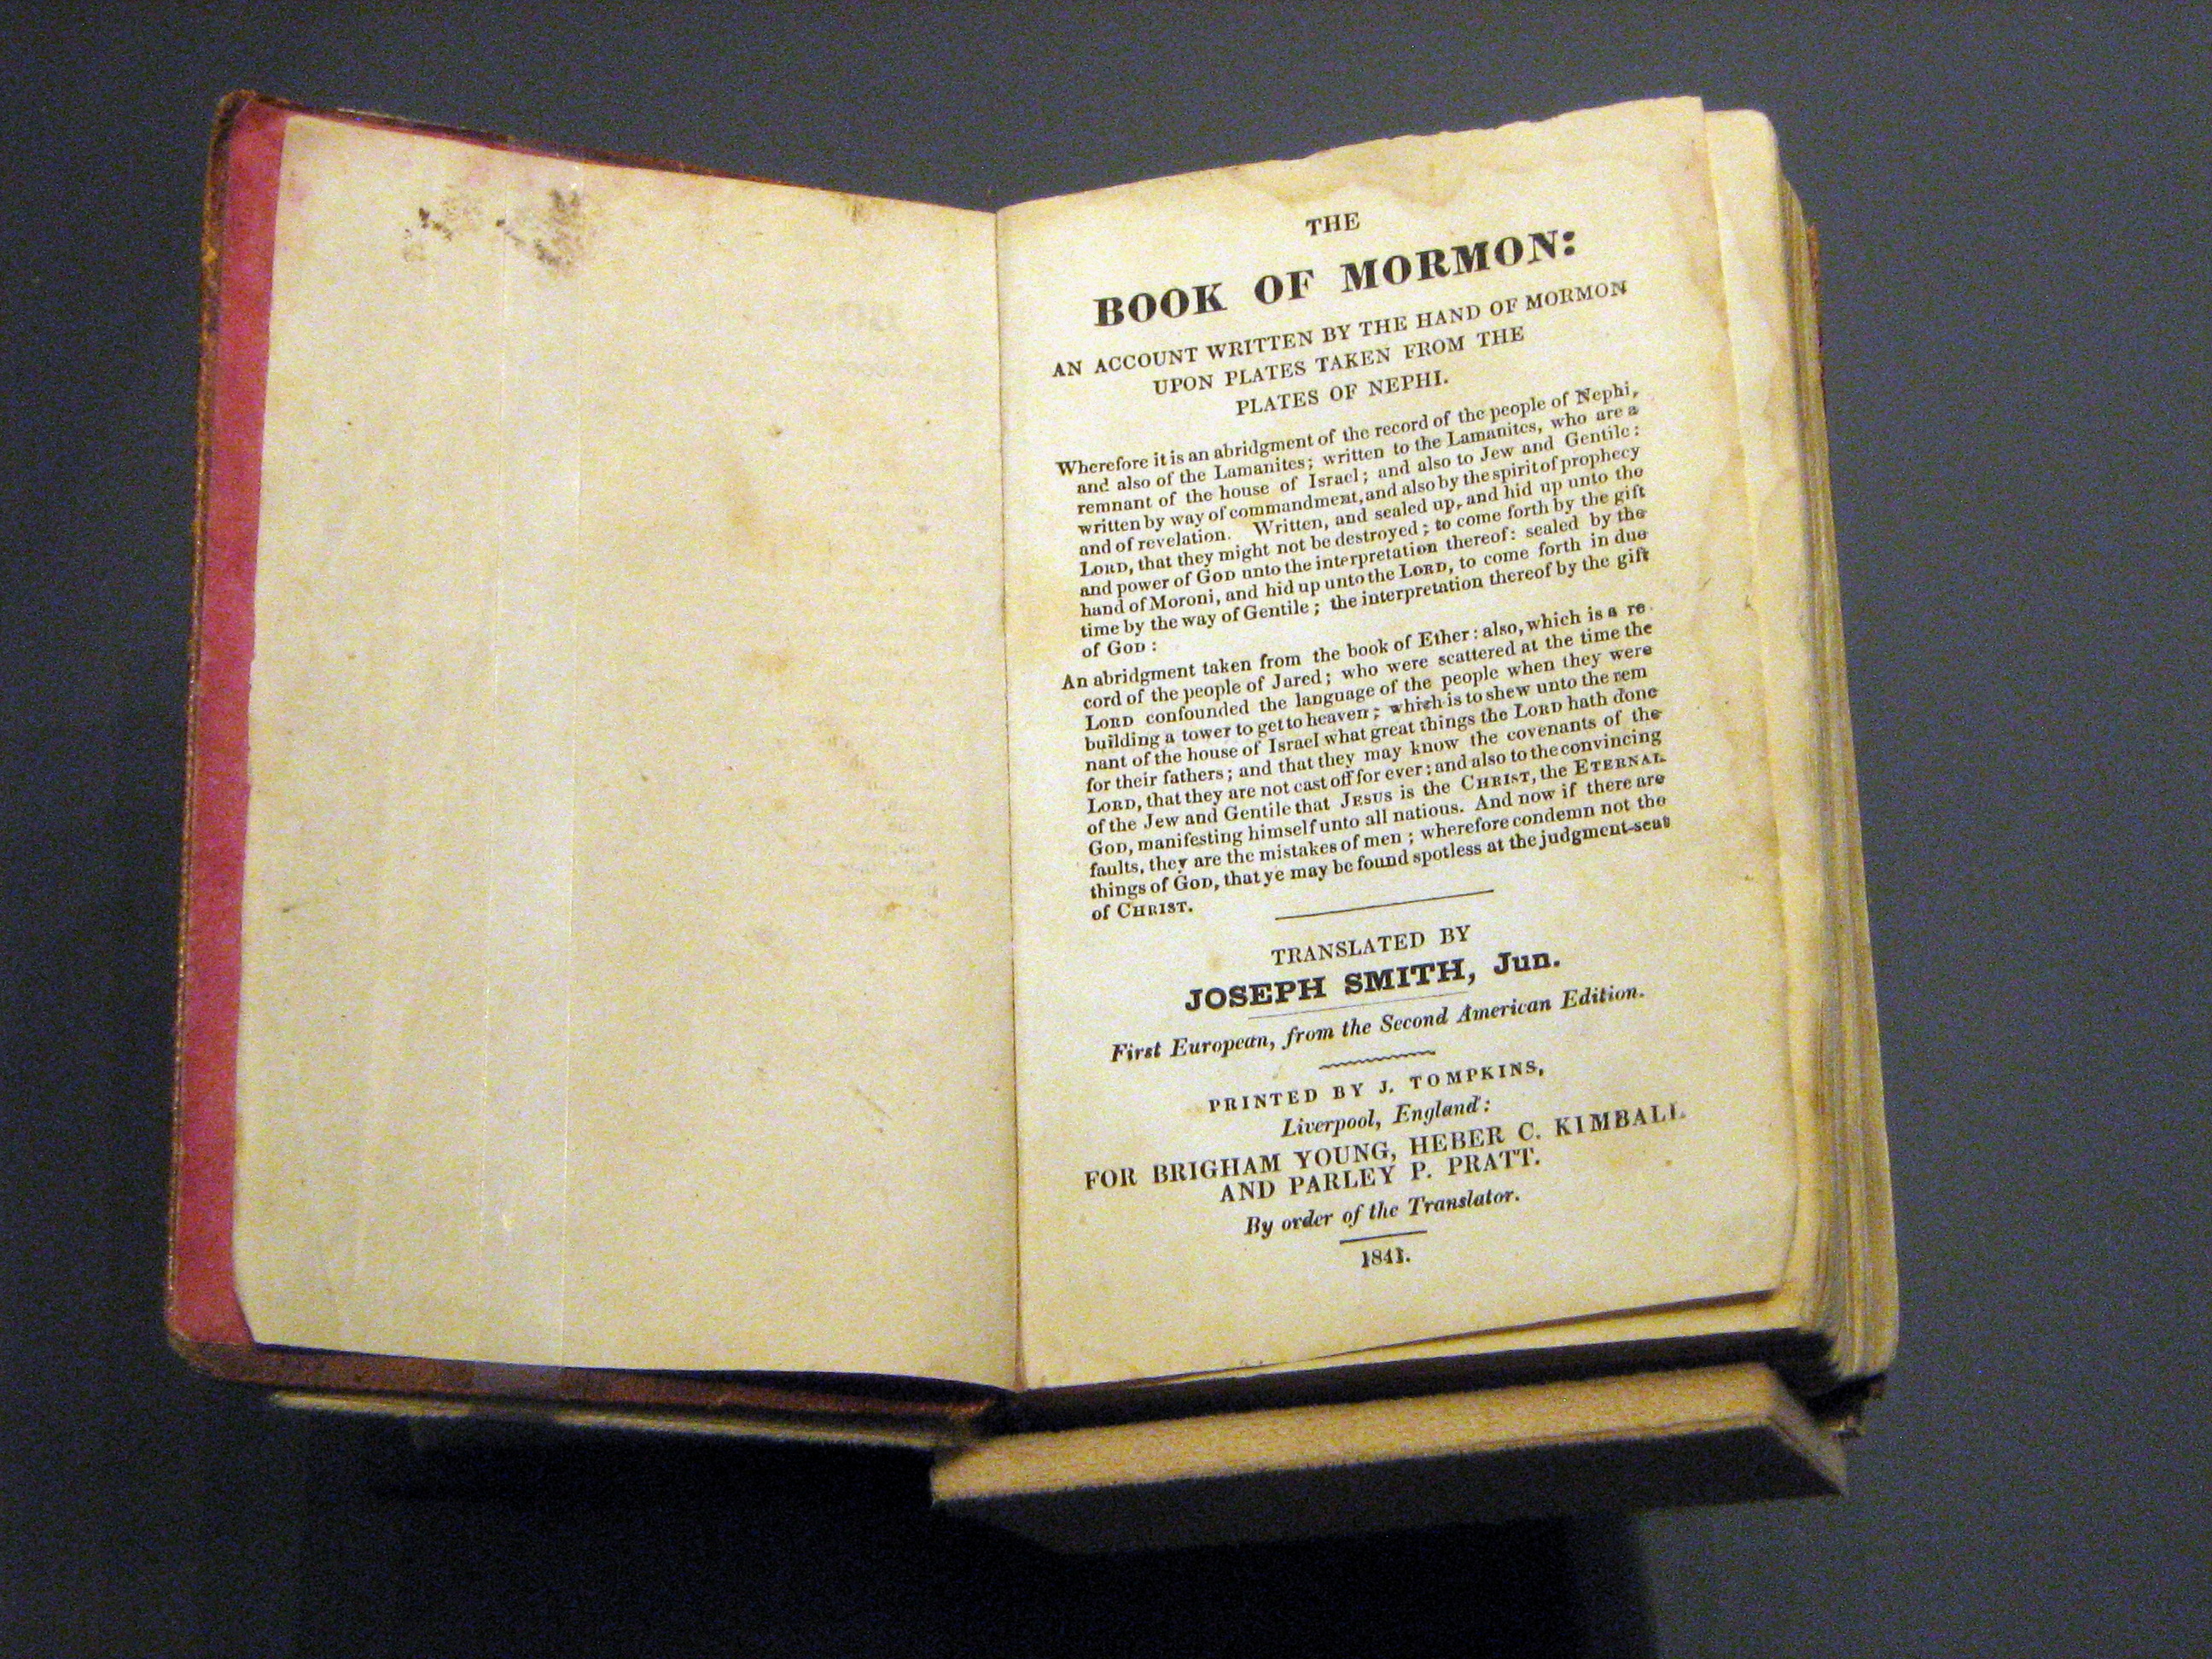 An 1841 copy of the Book of Mormon.